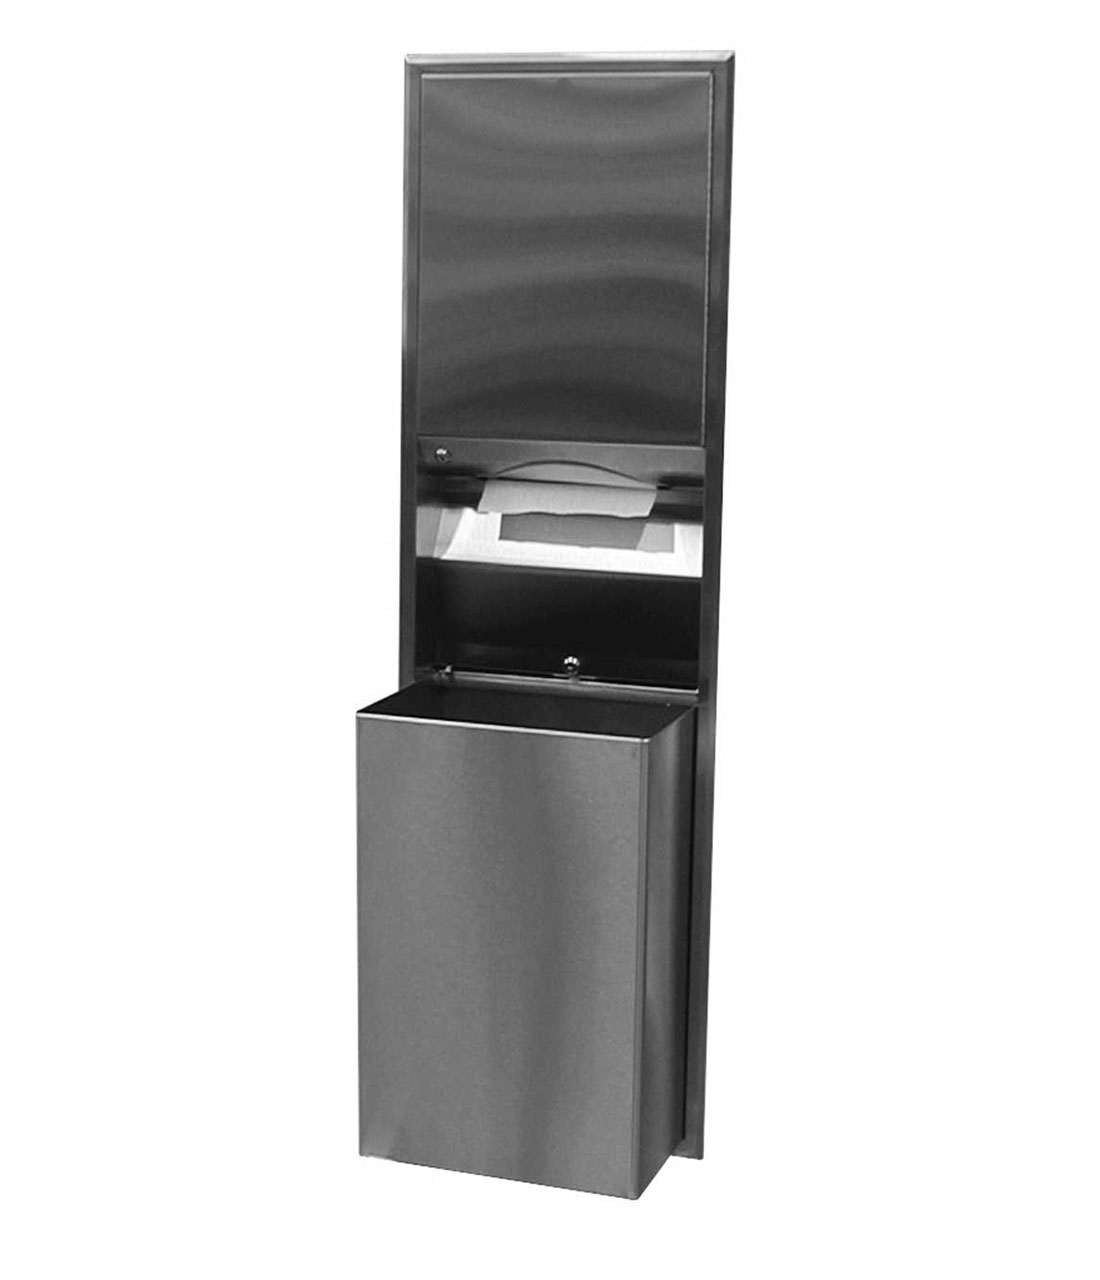 Recessed Convertible Paper Towel Dispenser/Waste Receptacle Image